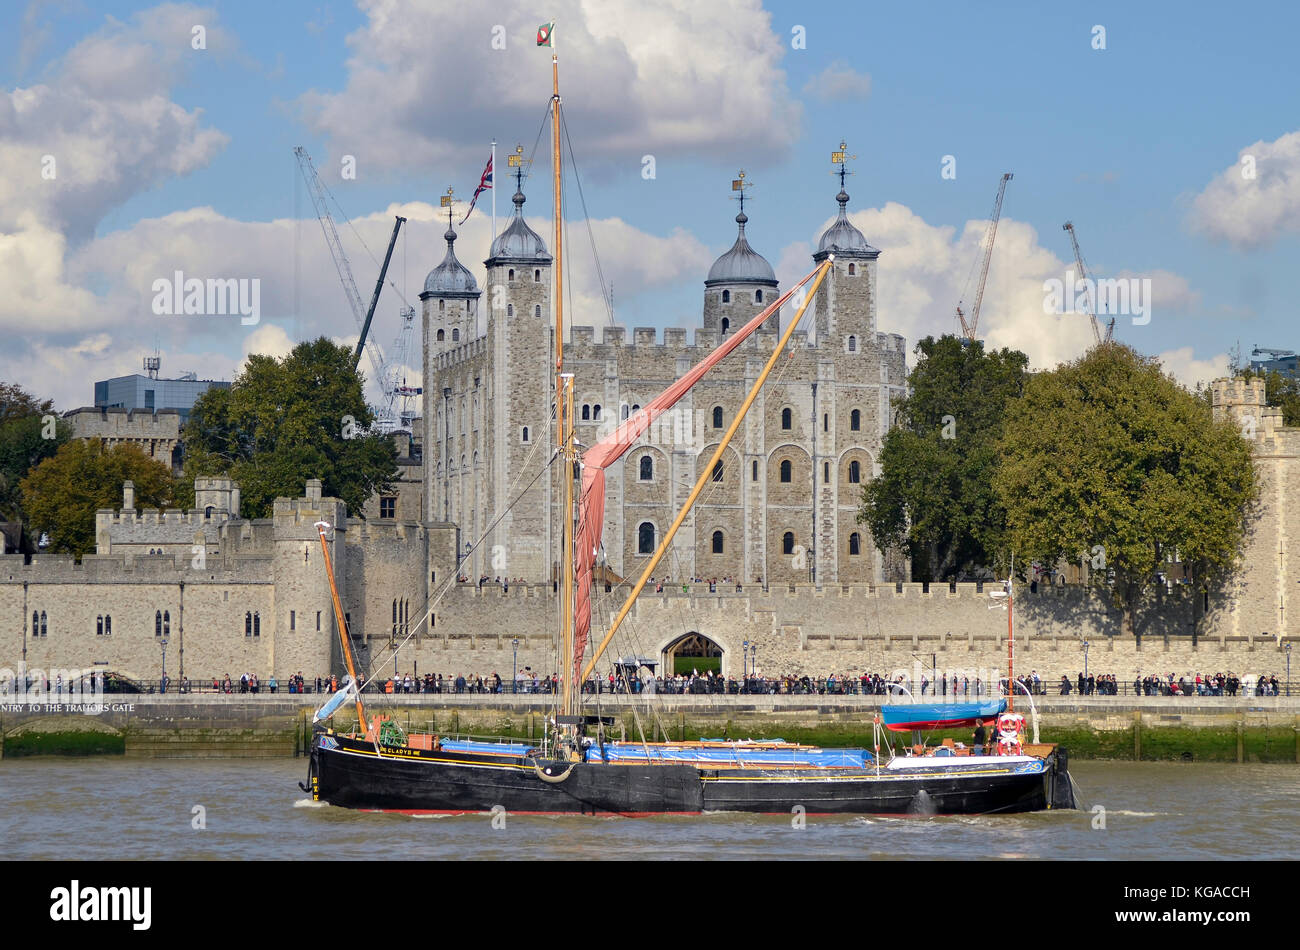 Thames sailing barge Gladys, Tower of London, River Thames, London, UK. Stock Photo